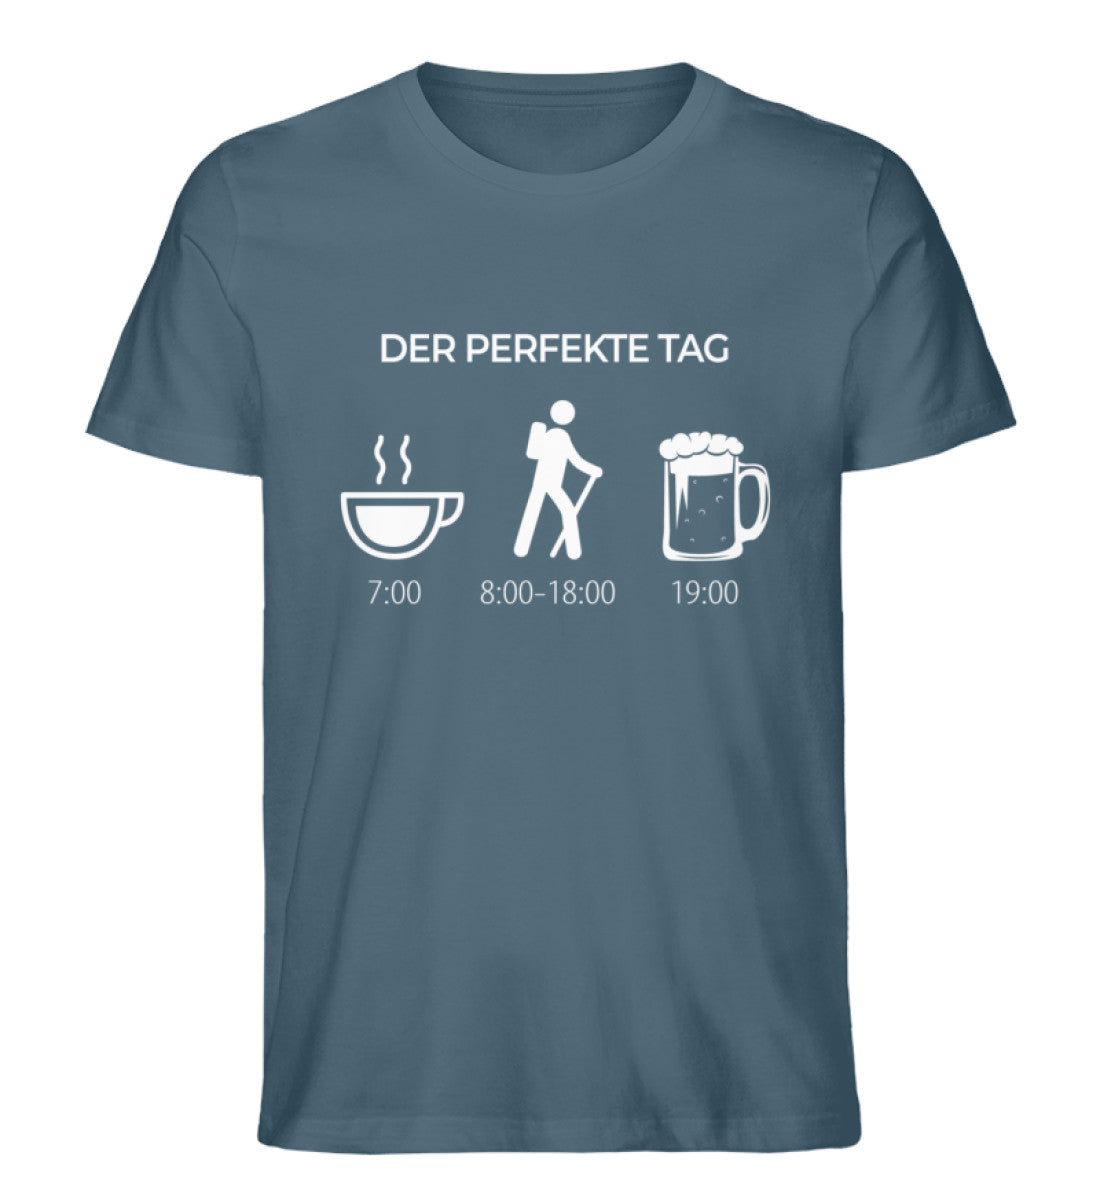 Der perfekte Tag - Herren Premium Organic T-Shirt wandern Stargazer